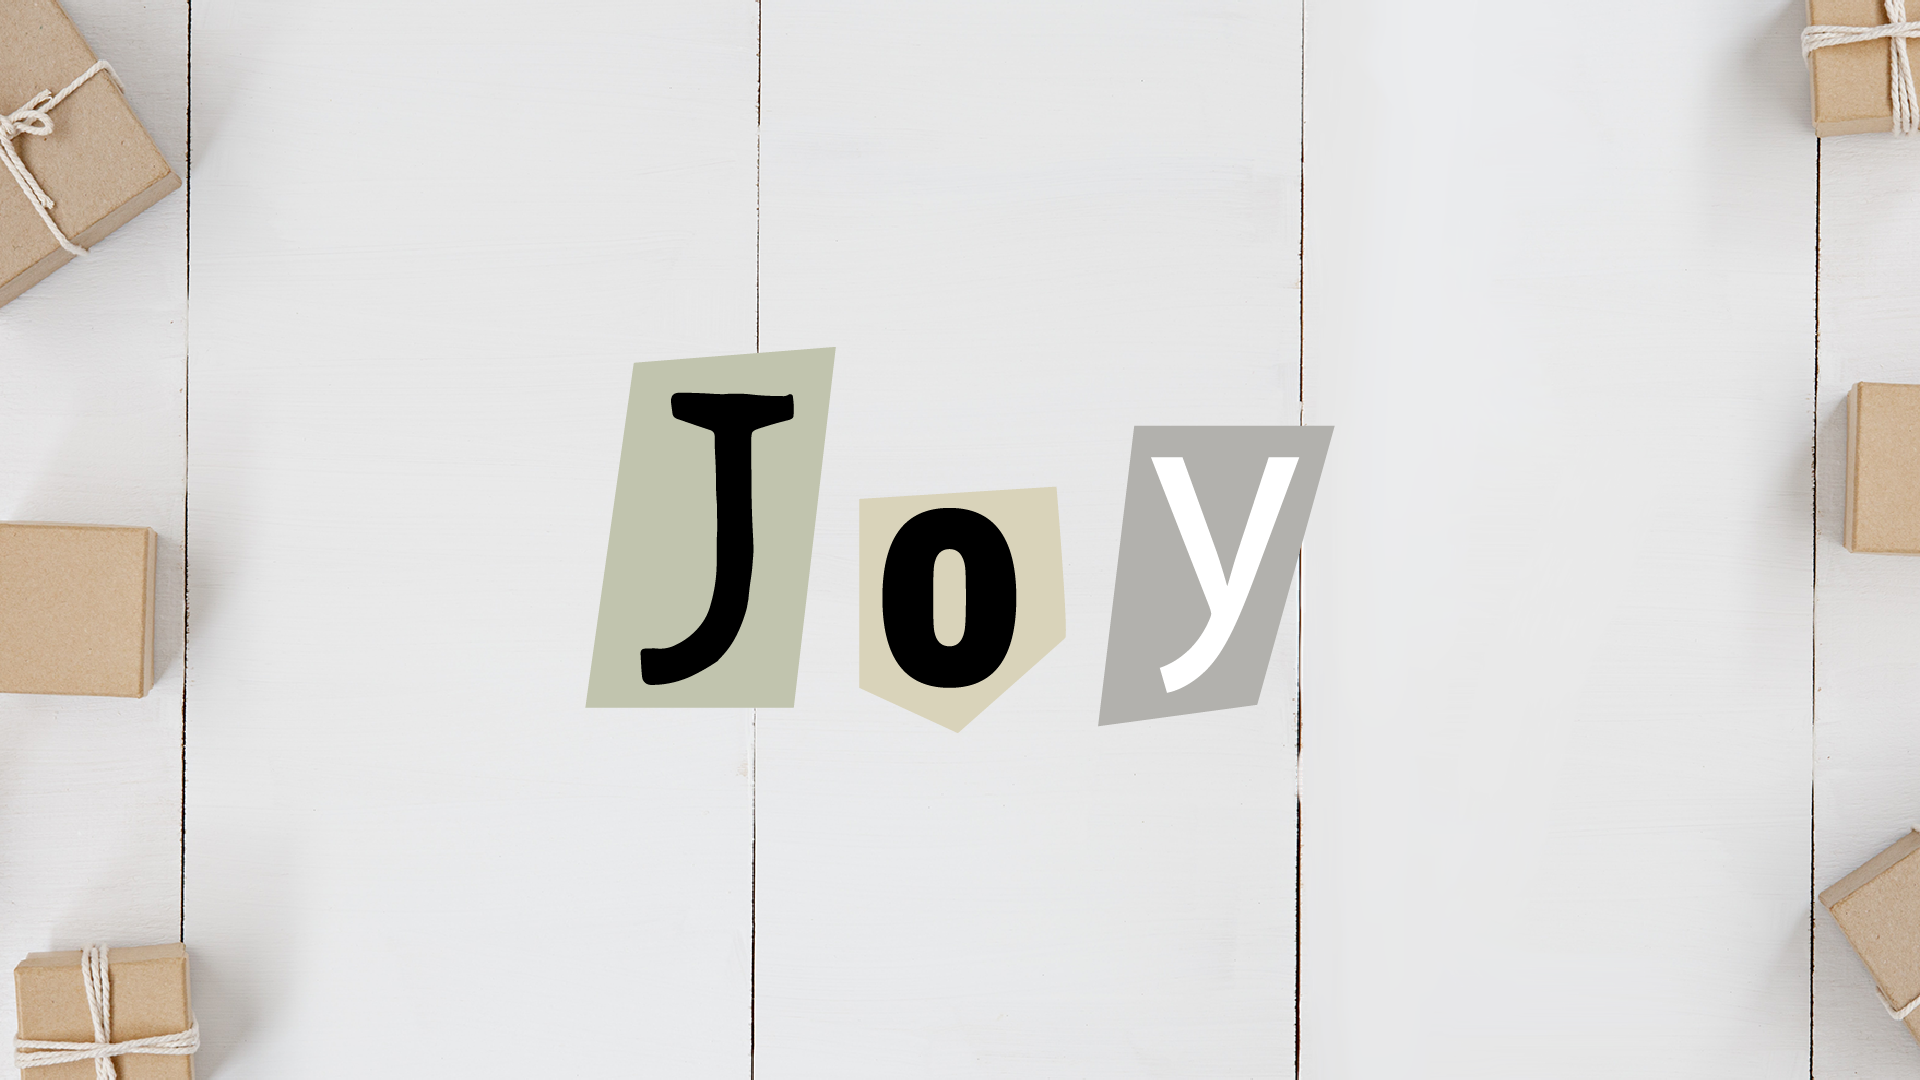 Sunday, Dec. 8th (Joy)